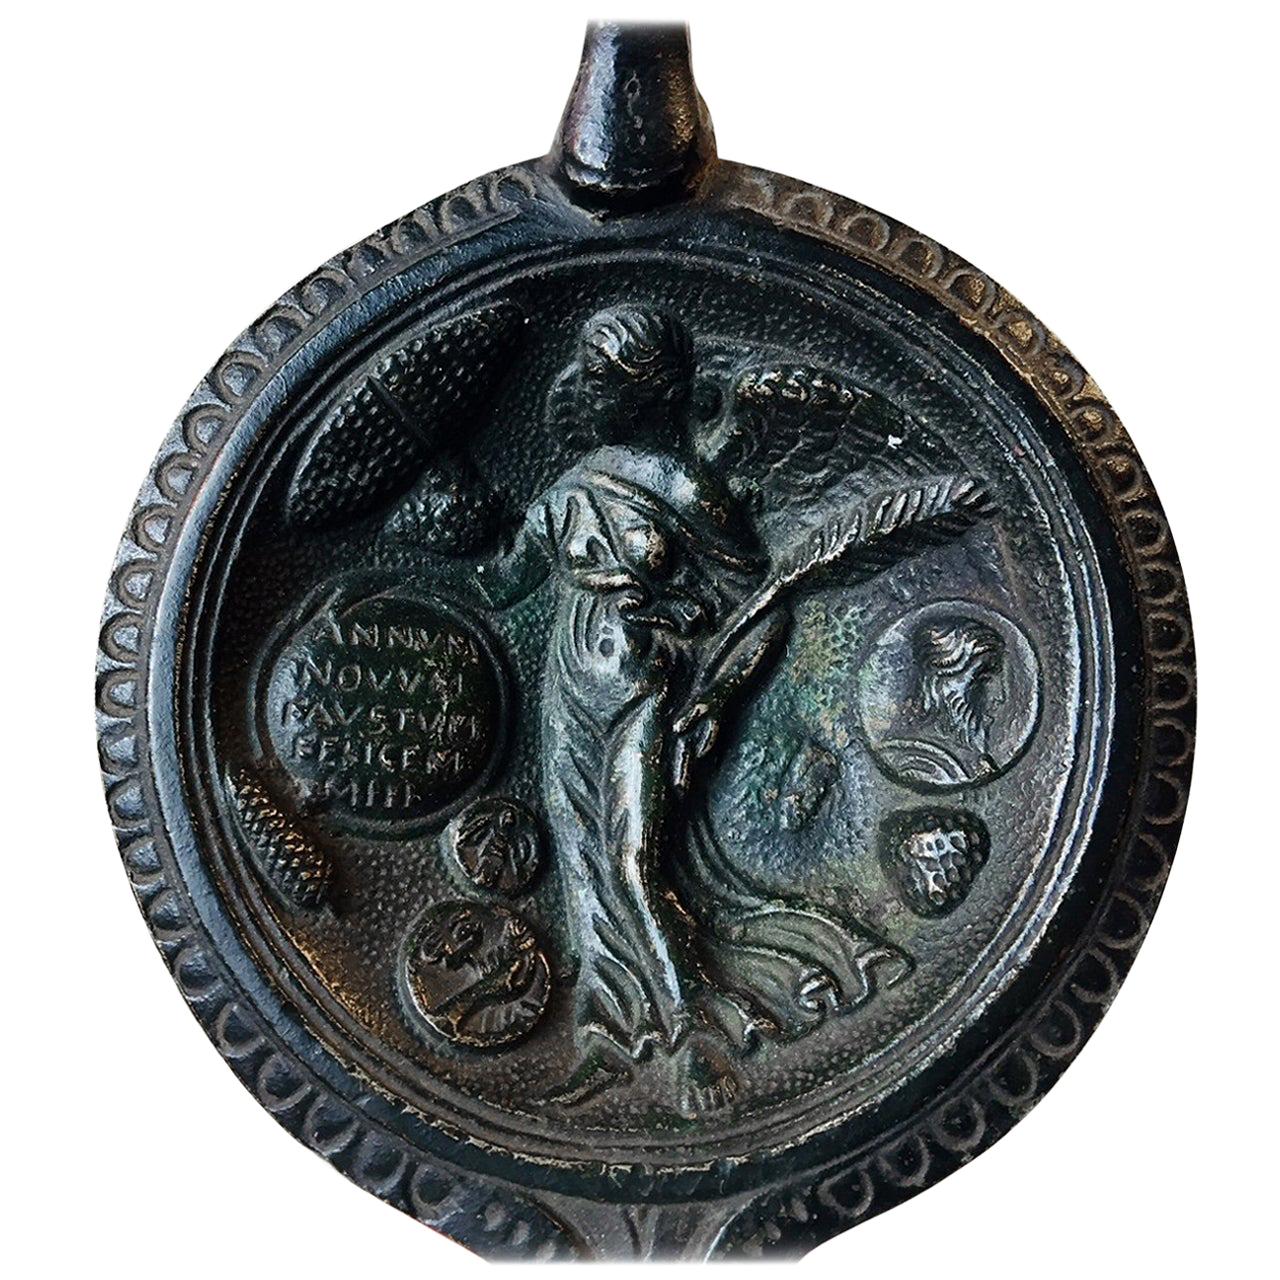 Antike Repro-Ölgemäldelampe aus antiker römischer Bronze, Annum Novum Faustum Felicem